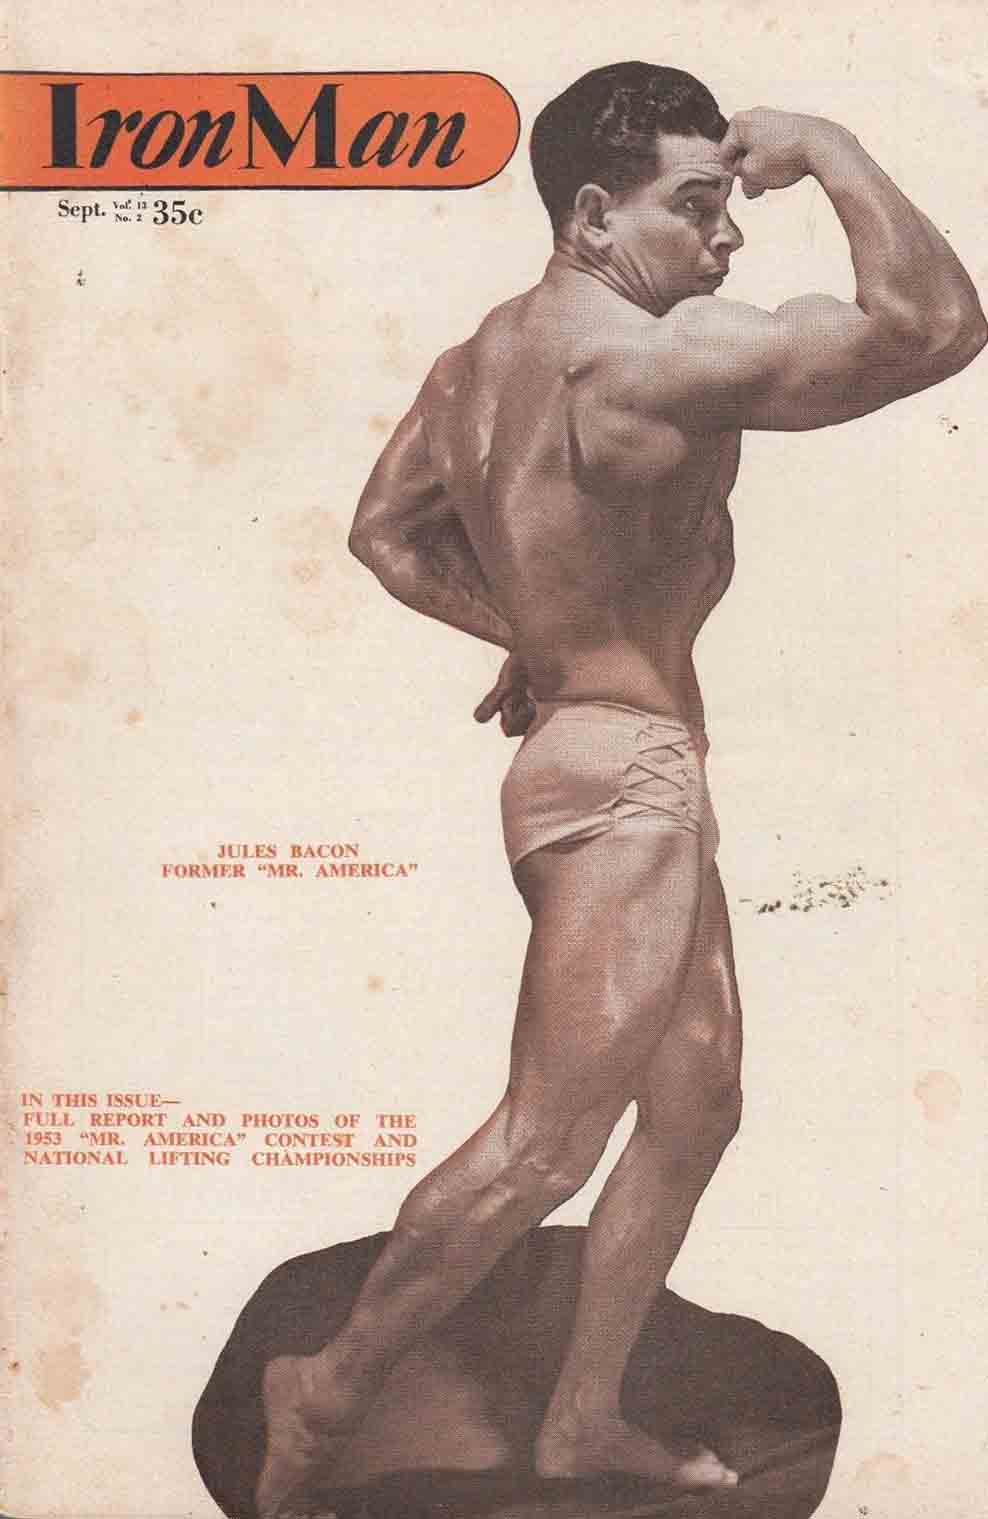 Ironman Sep 1953 magazine reviews